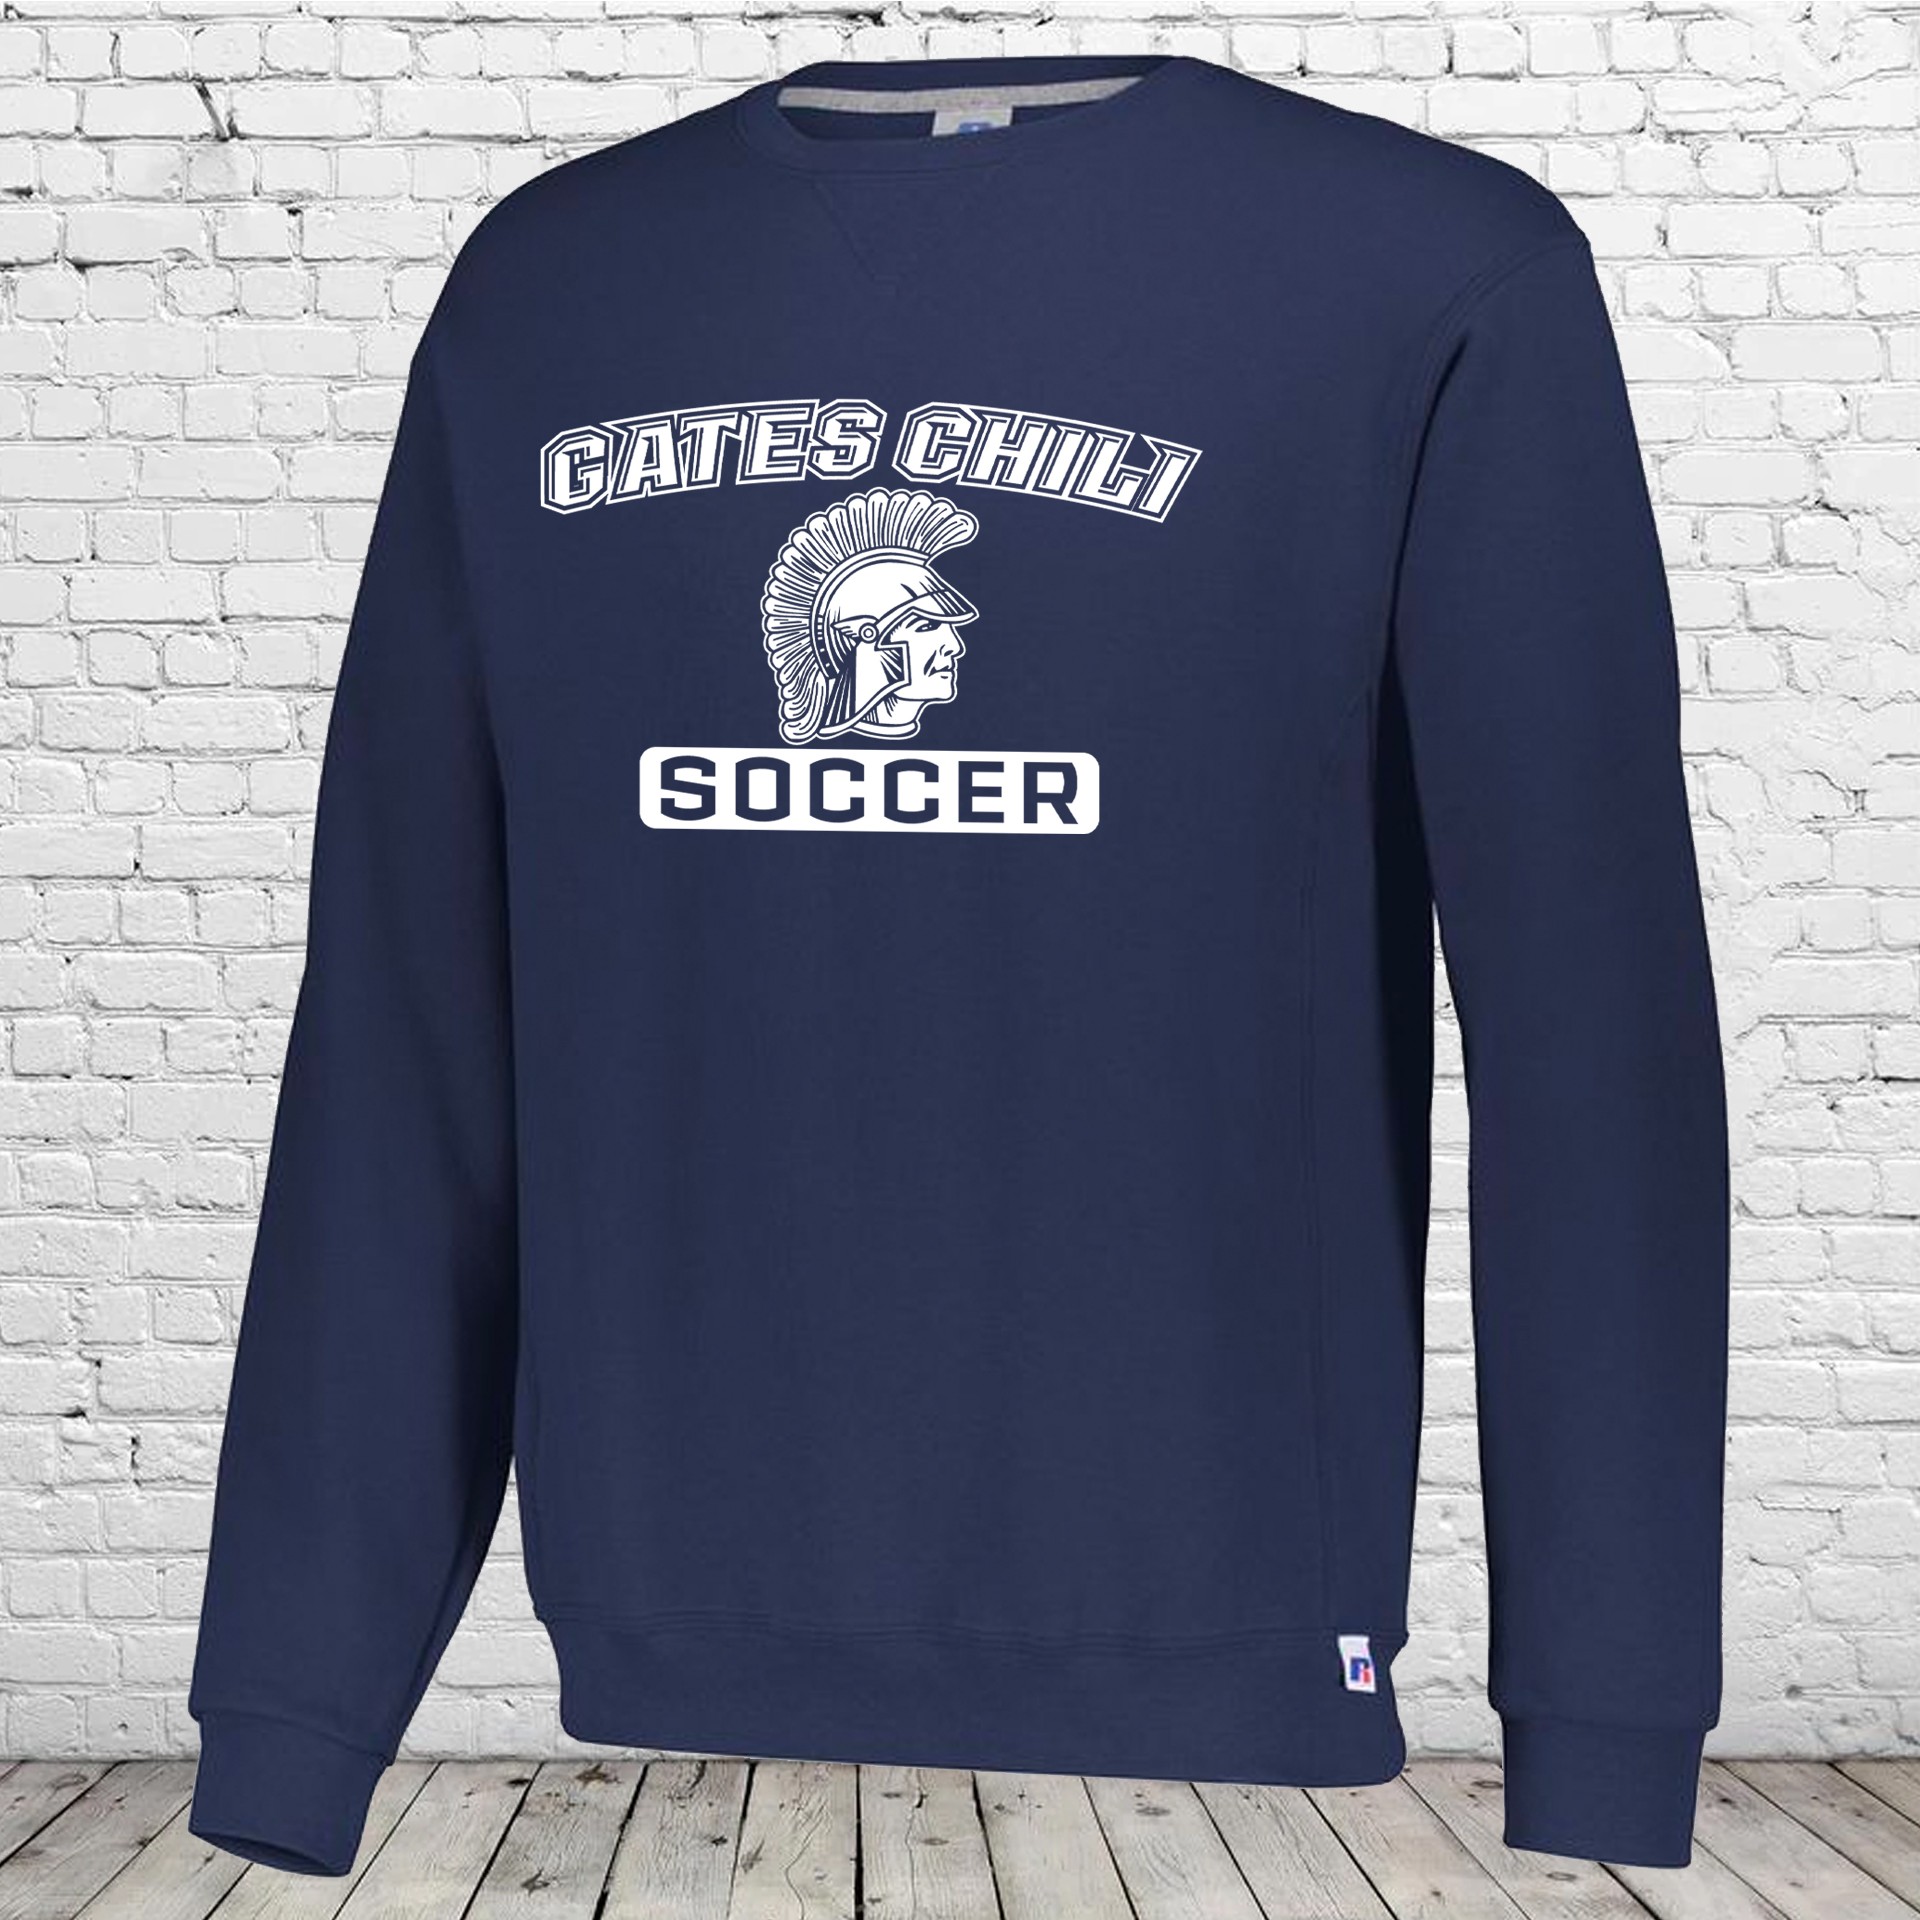 Gates Chili Soccer Crewneck Sweatshirt Roc City Custom Apparel